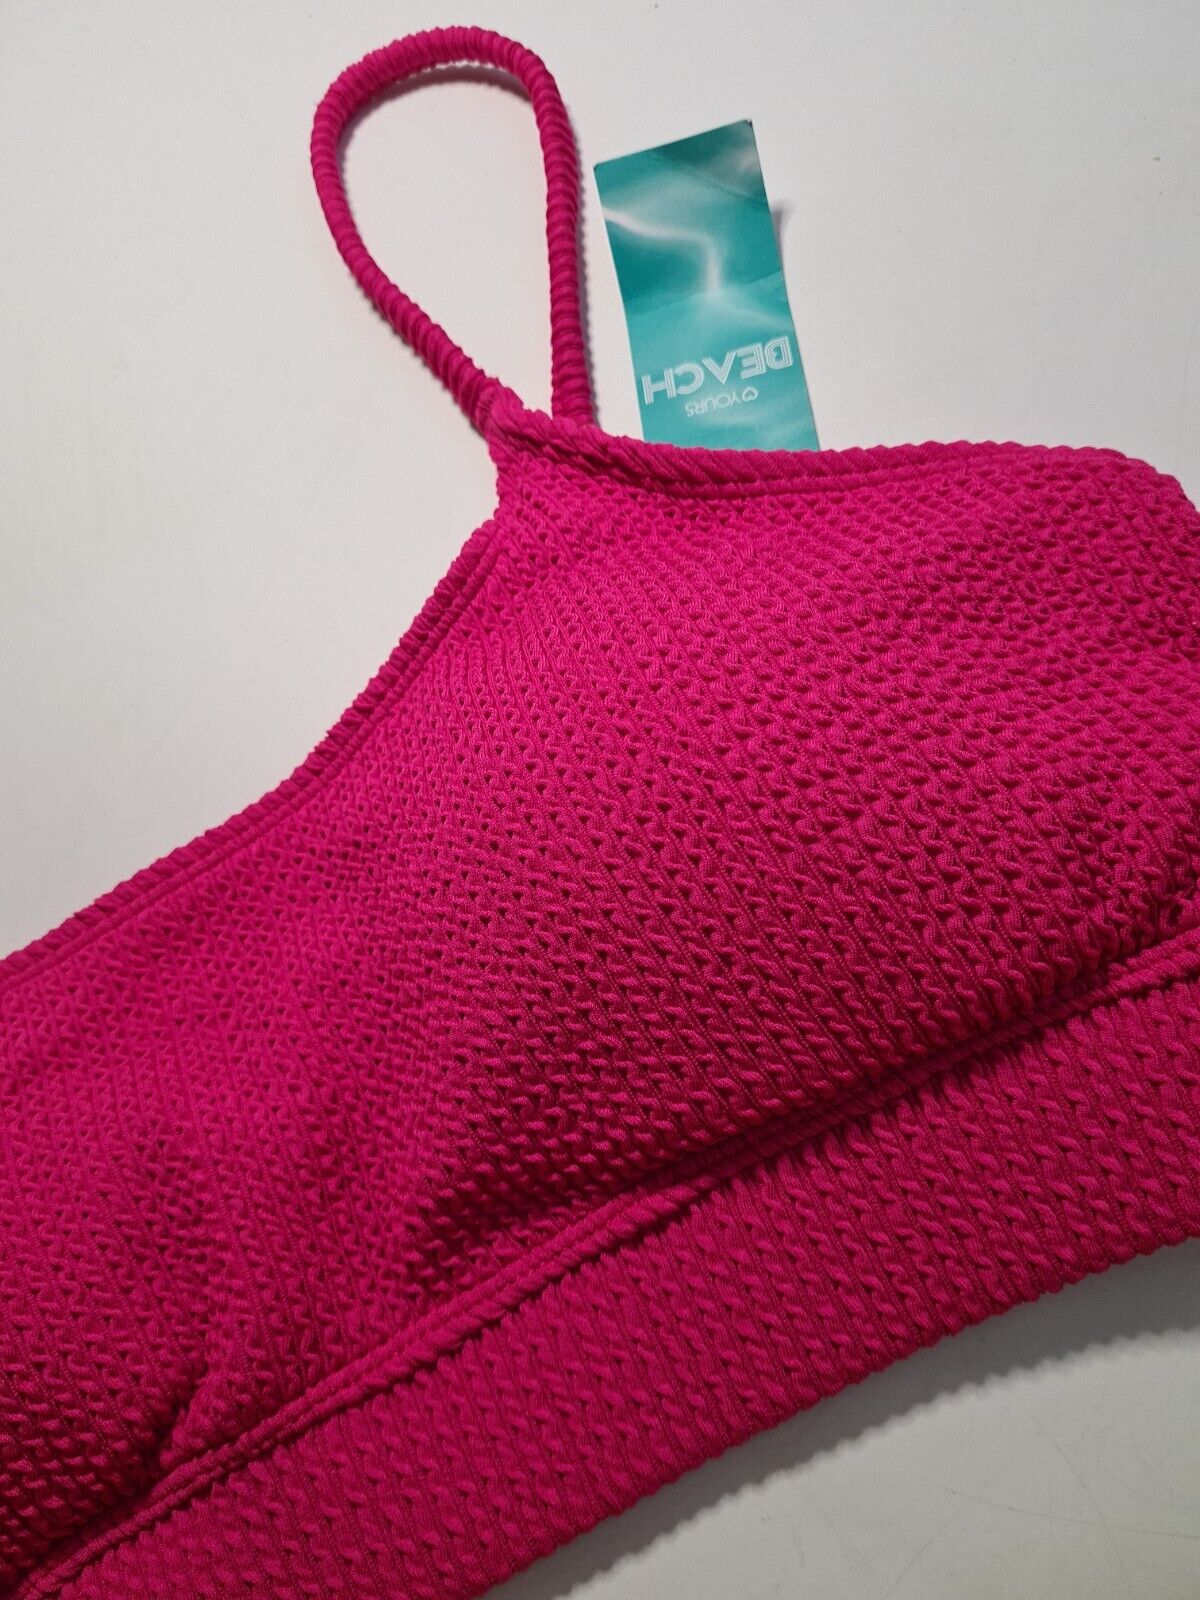 Yours Beach Pink Texture Plus Bikini Top Uk18 ****Ref V191